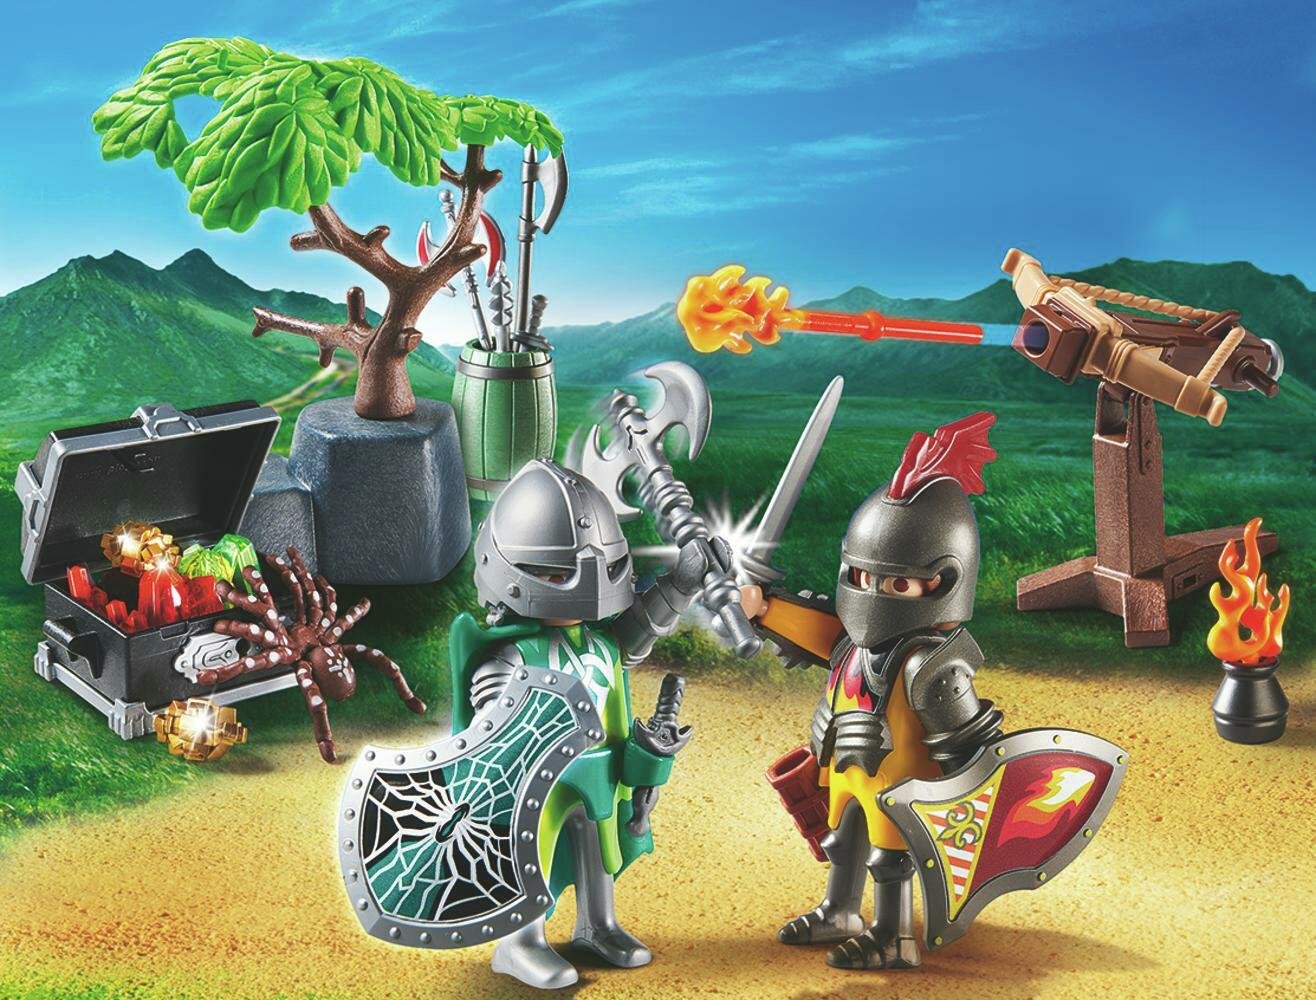 Playmobil 70036 Knight's Treasure Battle Playset Review